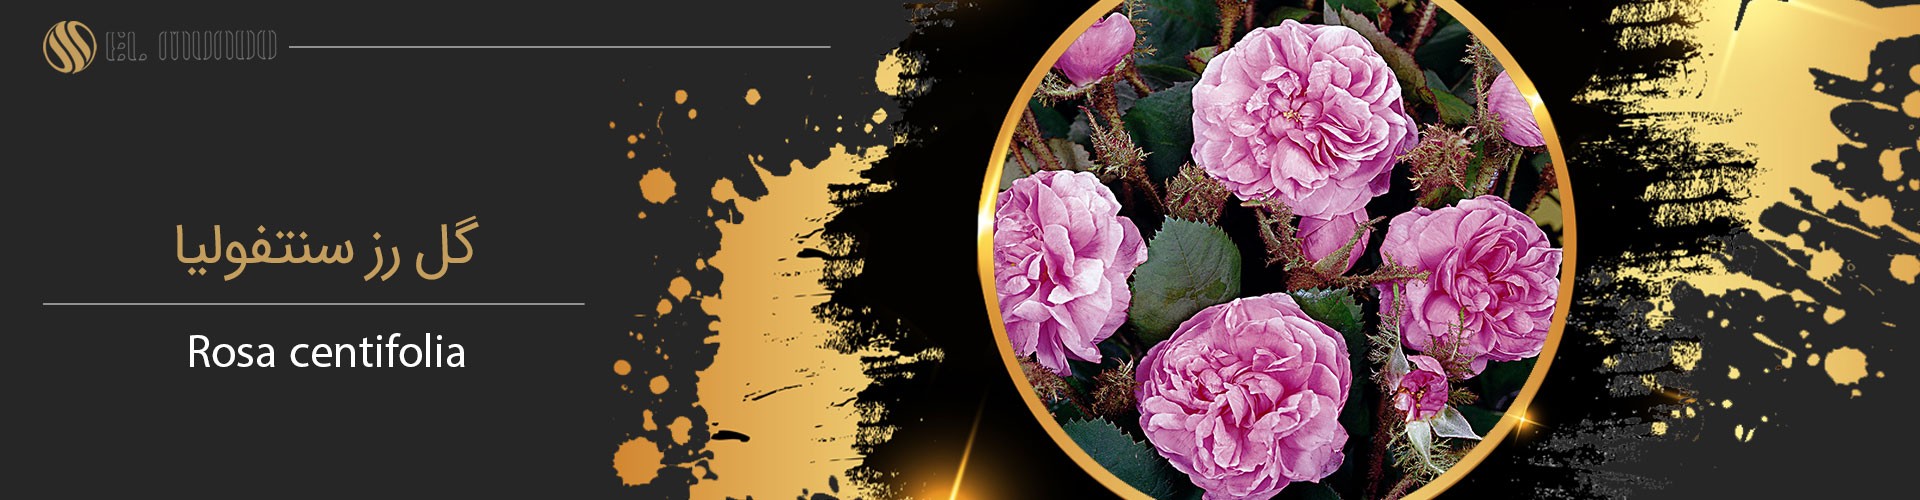 rose centifolia - نت گل رز عنصر ضروری عطرساز